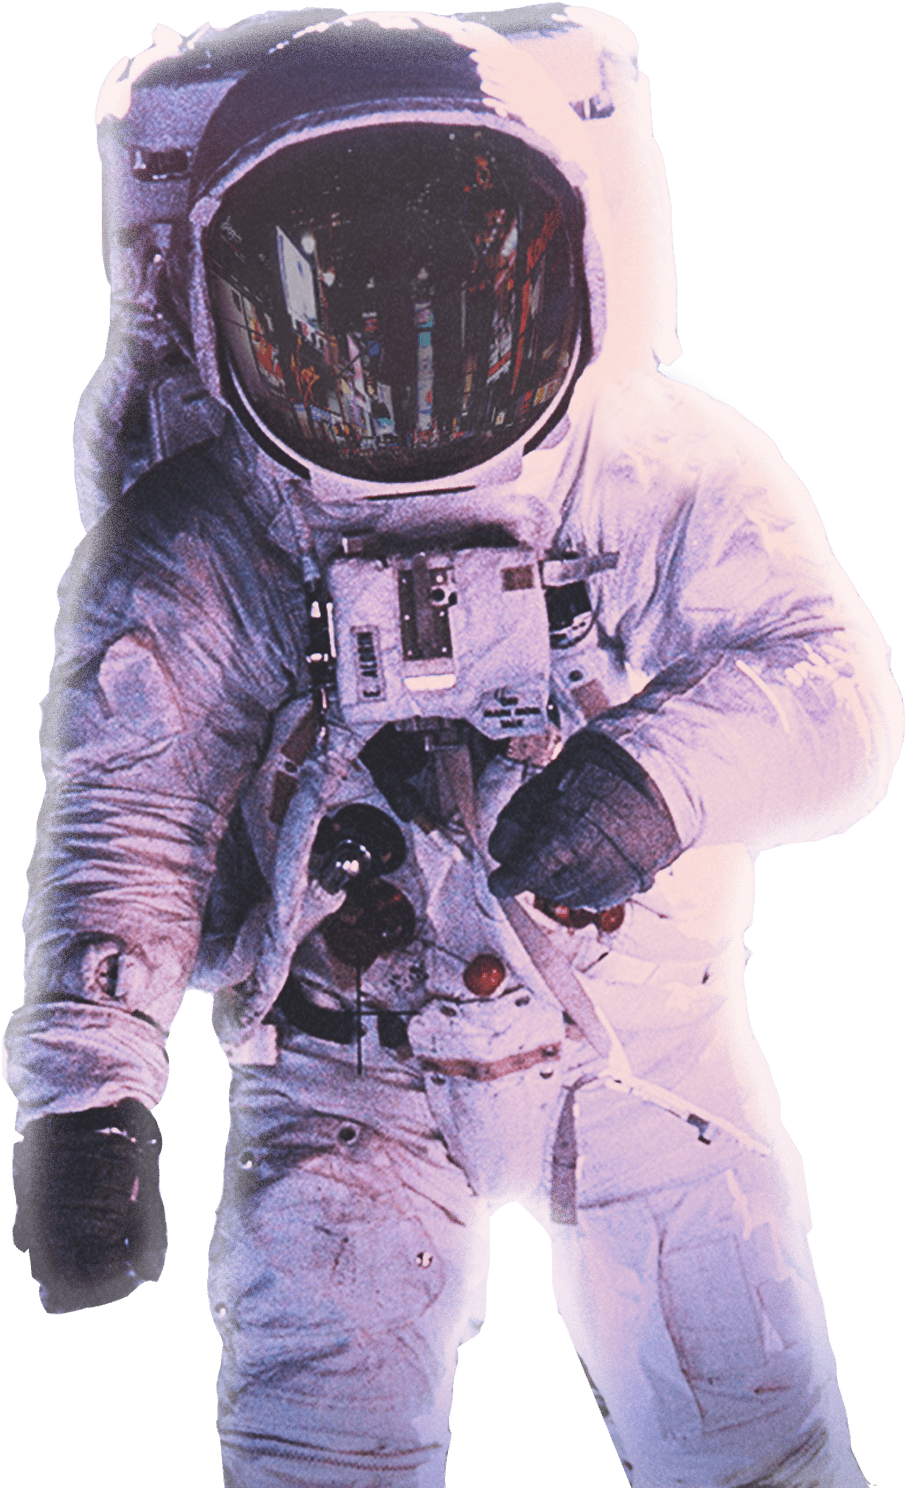 Astronautin Space Suit